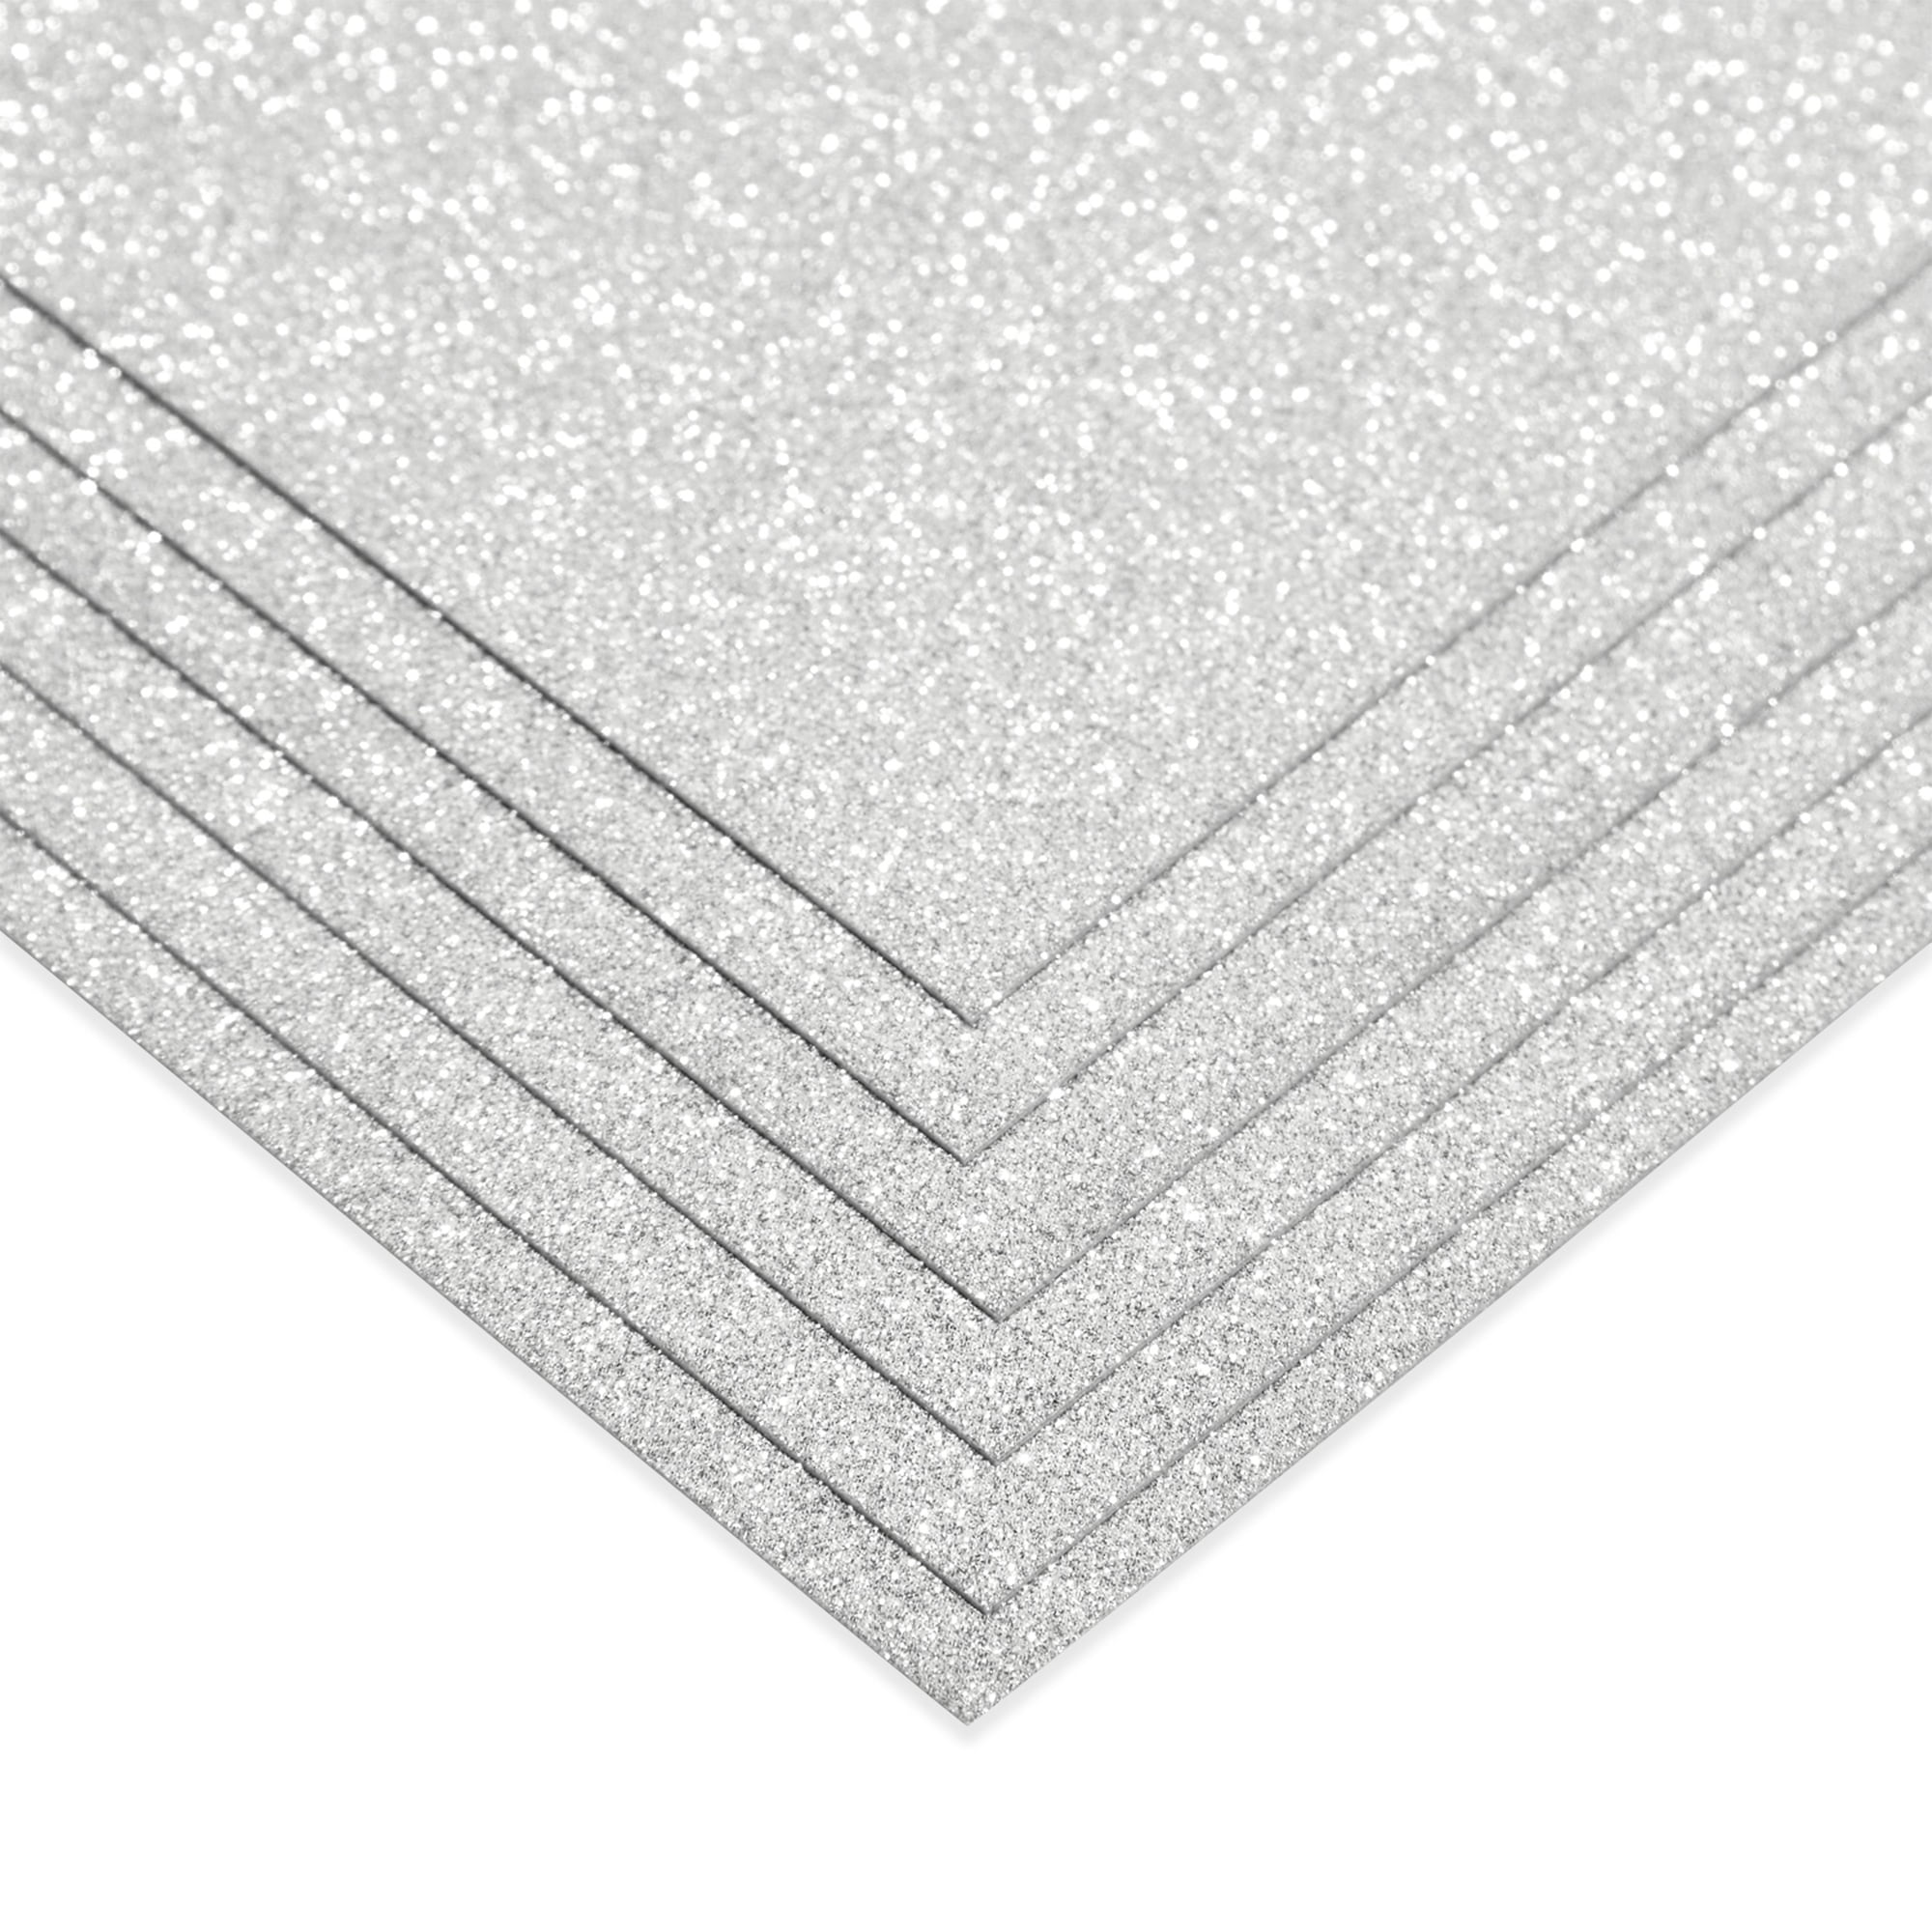 A4 Glitter Paper – Silver (10 Sheets)